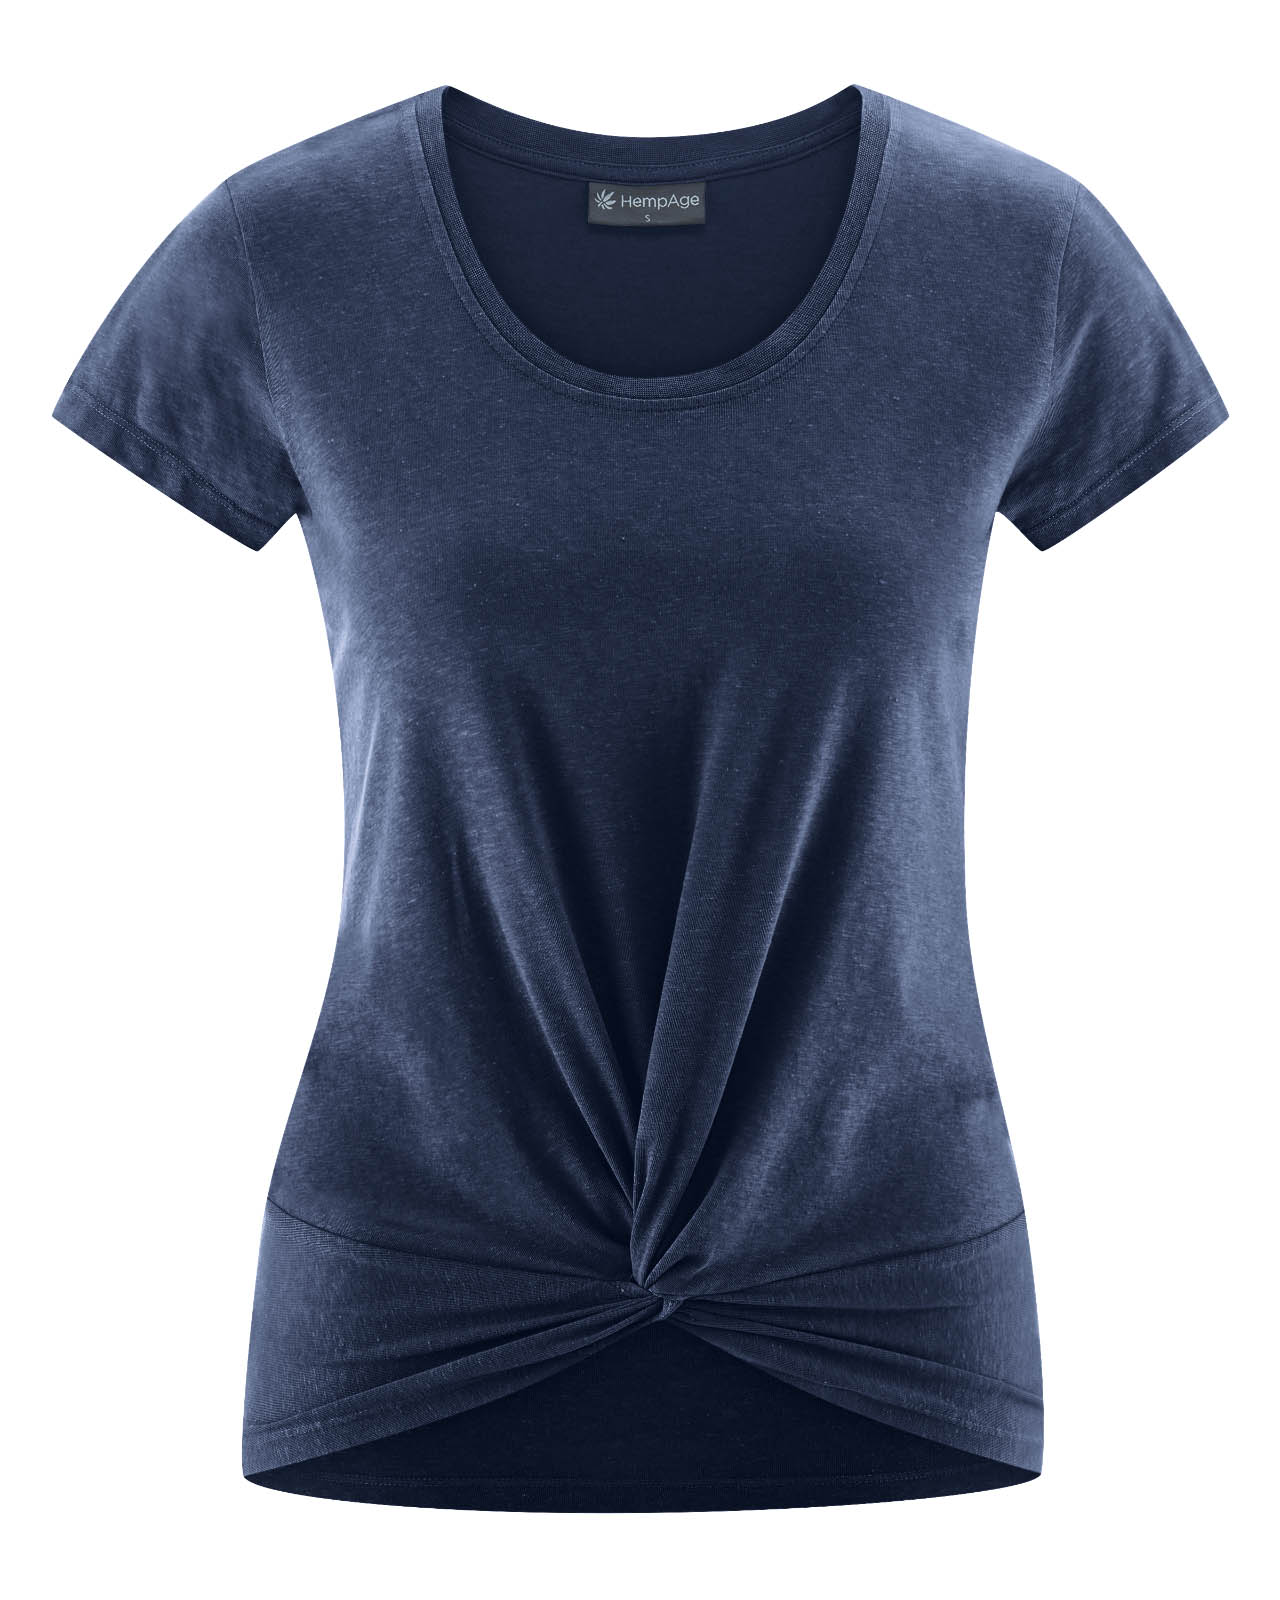 DH652 Yoga T-Shirt Knotendetail